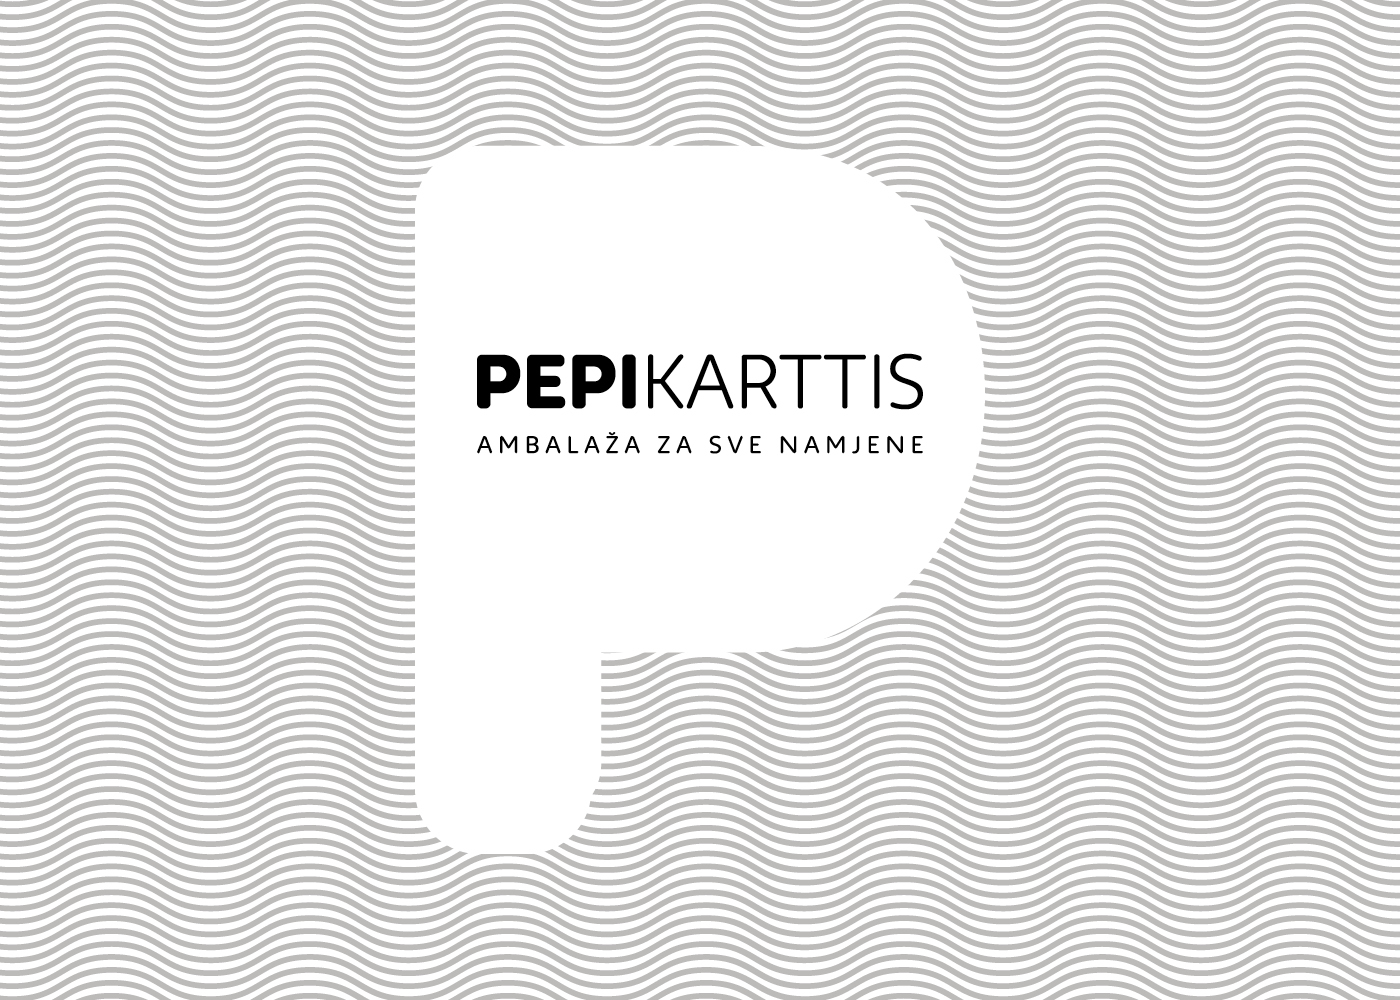 Vizualni identitet i dizajn web stranice tiskare Pepi Karttis